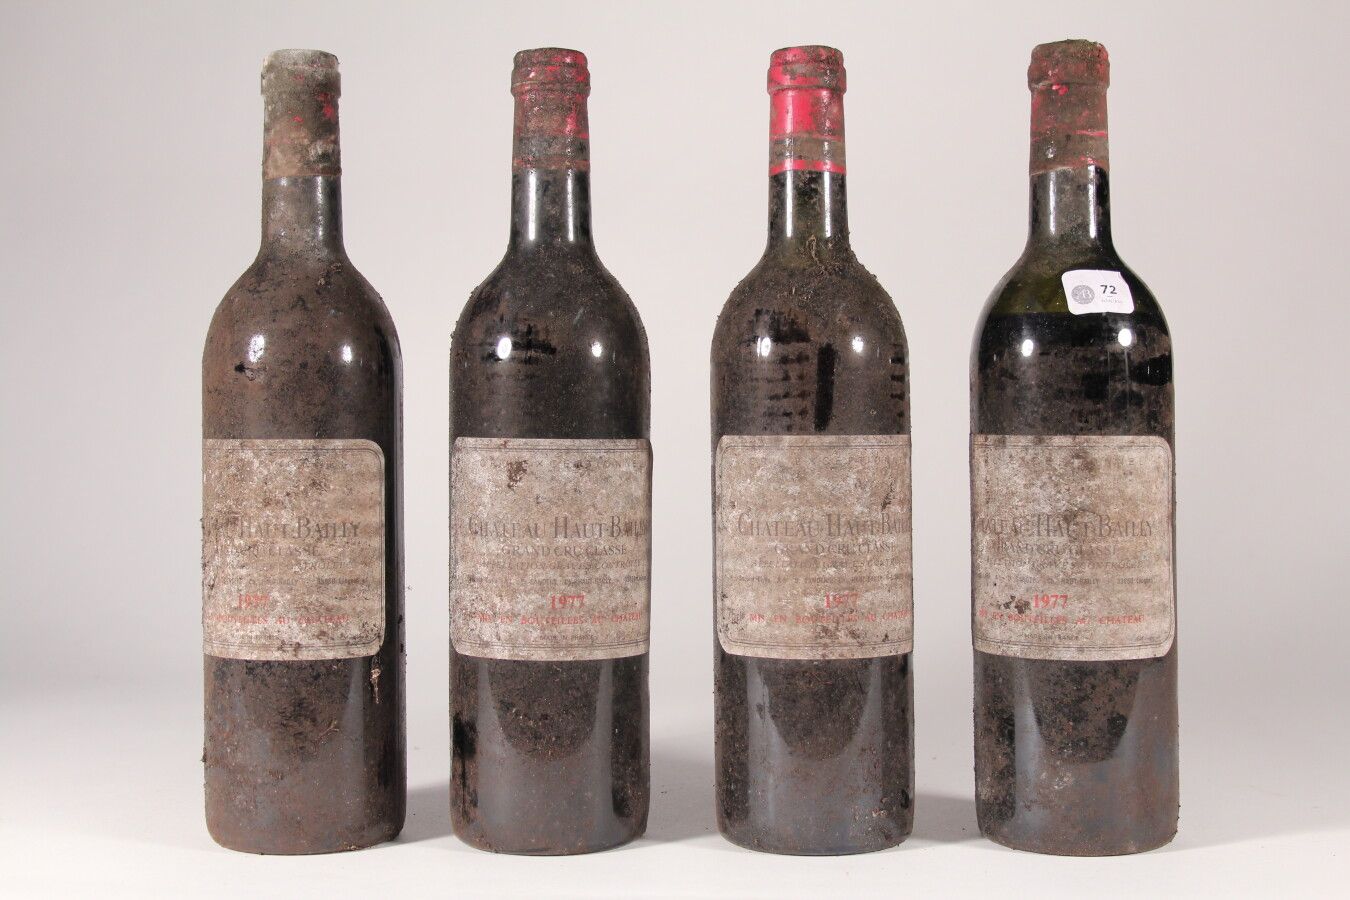 Null 1977 - Château Haut-Bailly

Haut-Médoc - 4 bottiglie (di cui 1 bassa)